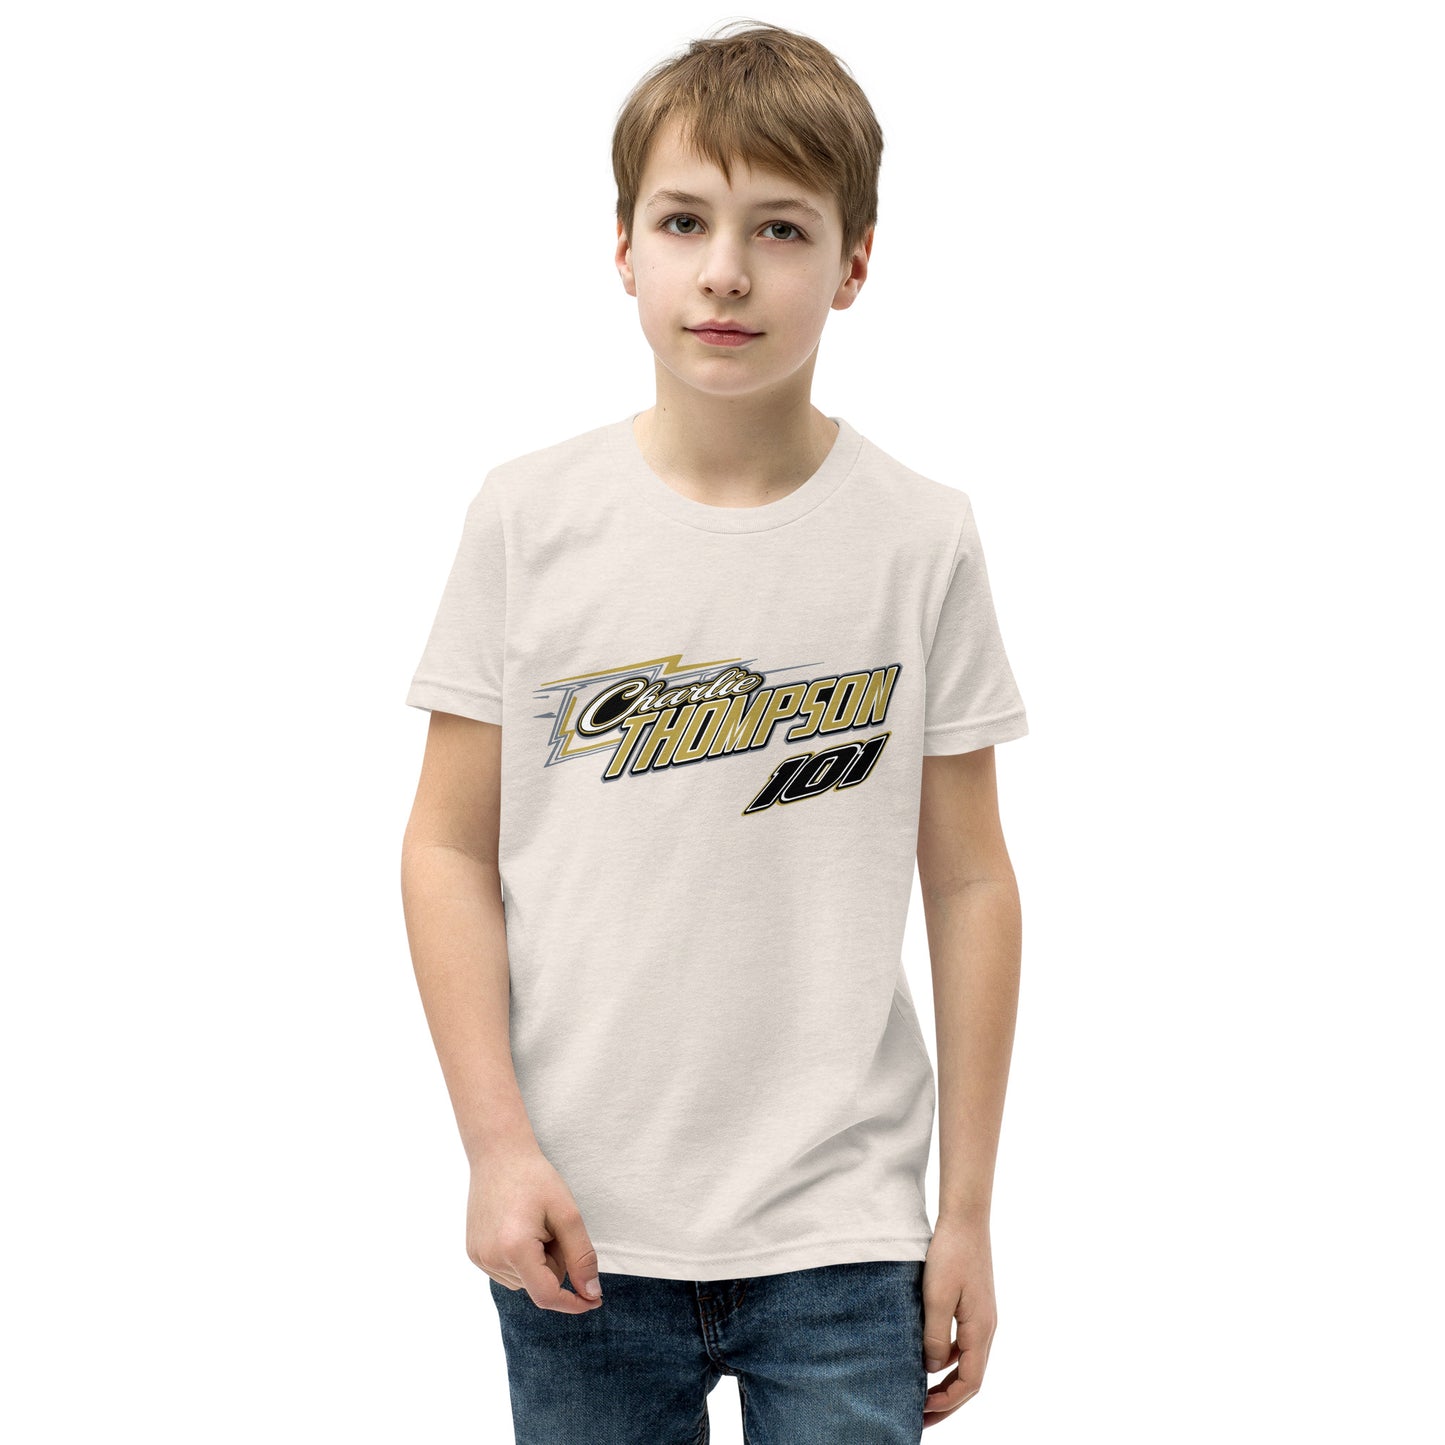 Charlie Thompson Kids T-Shirt